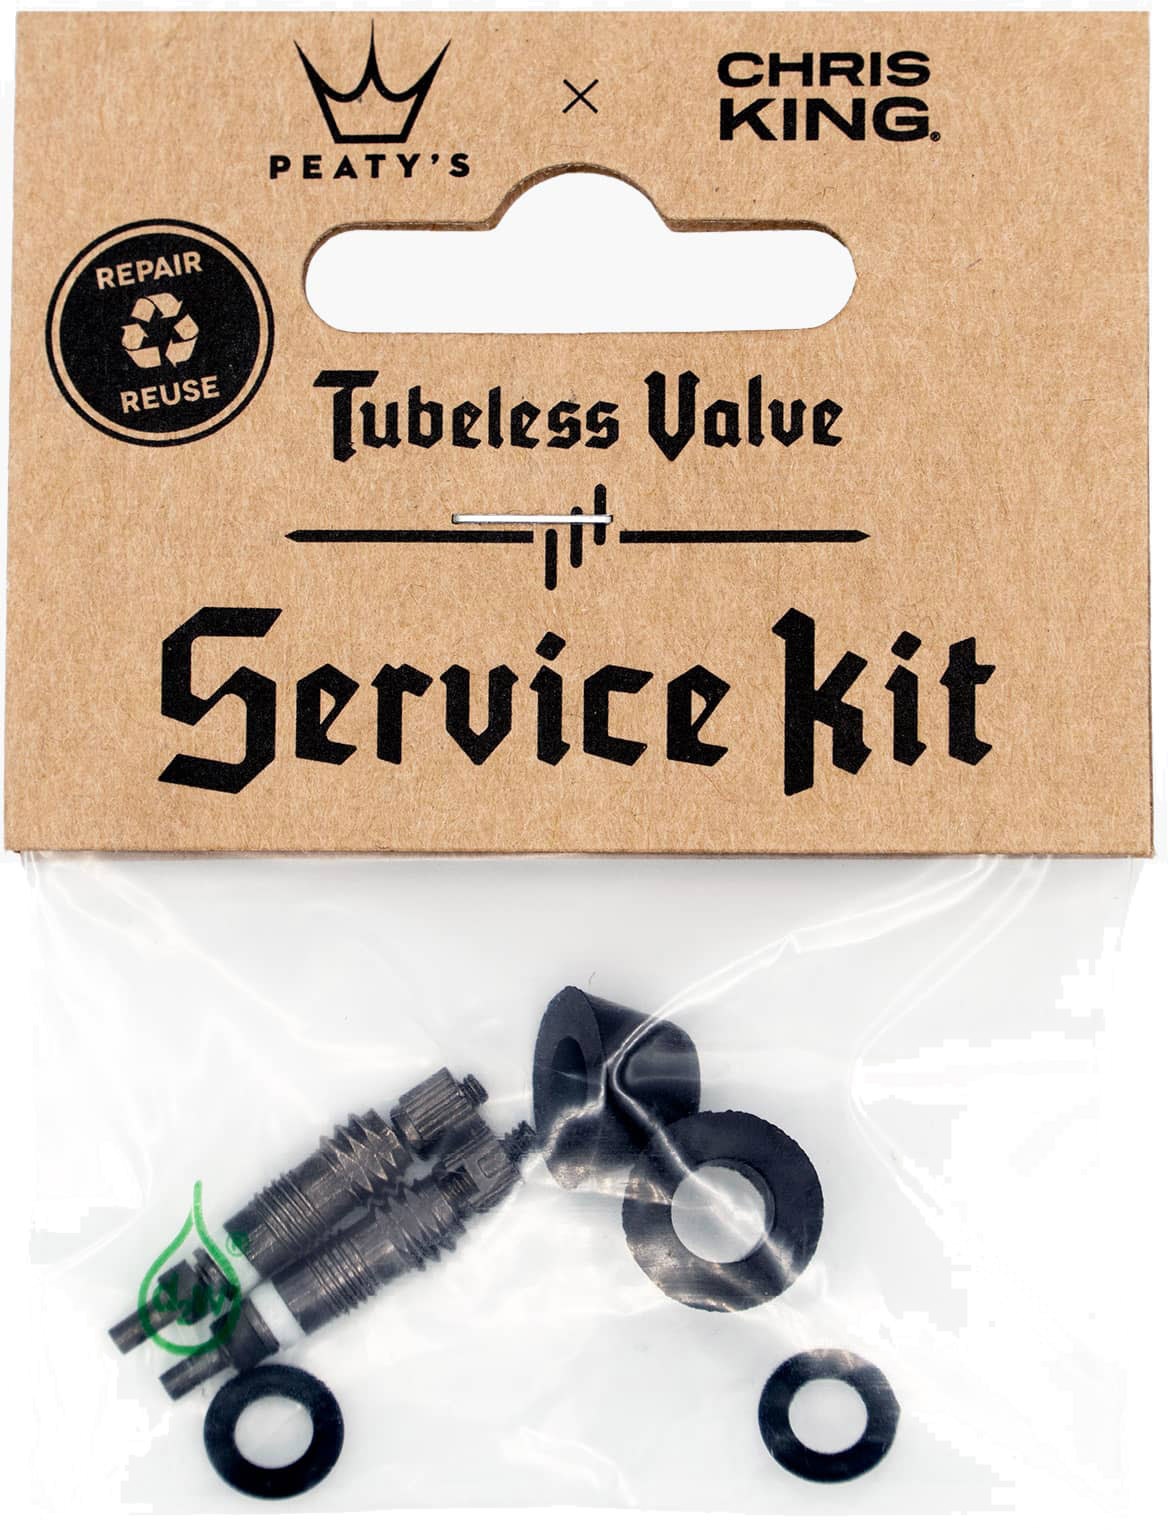 Se Peaty's x ChrisKing Tubeless Valve Service Kit hos Cykelexperten.dk